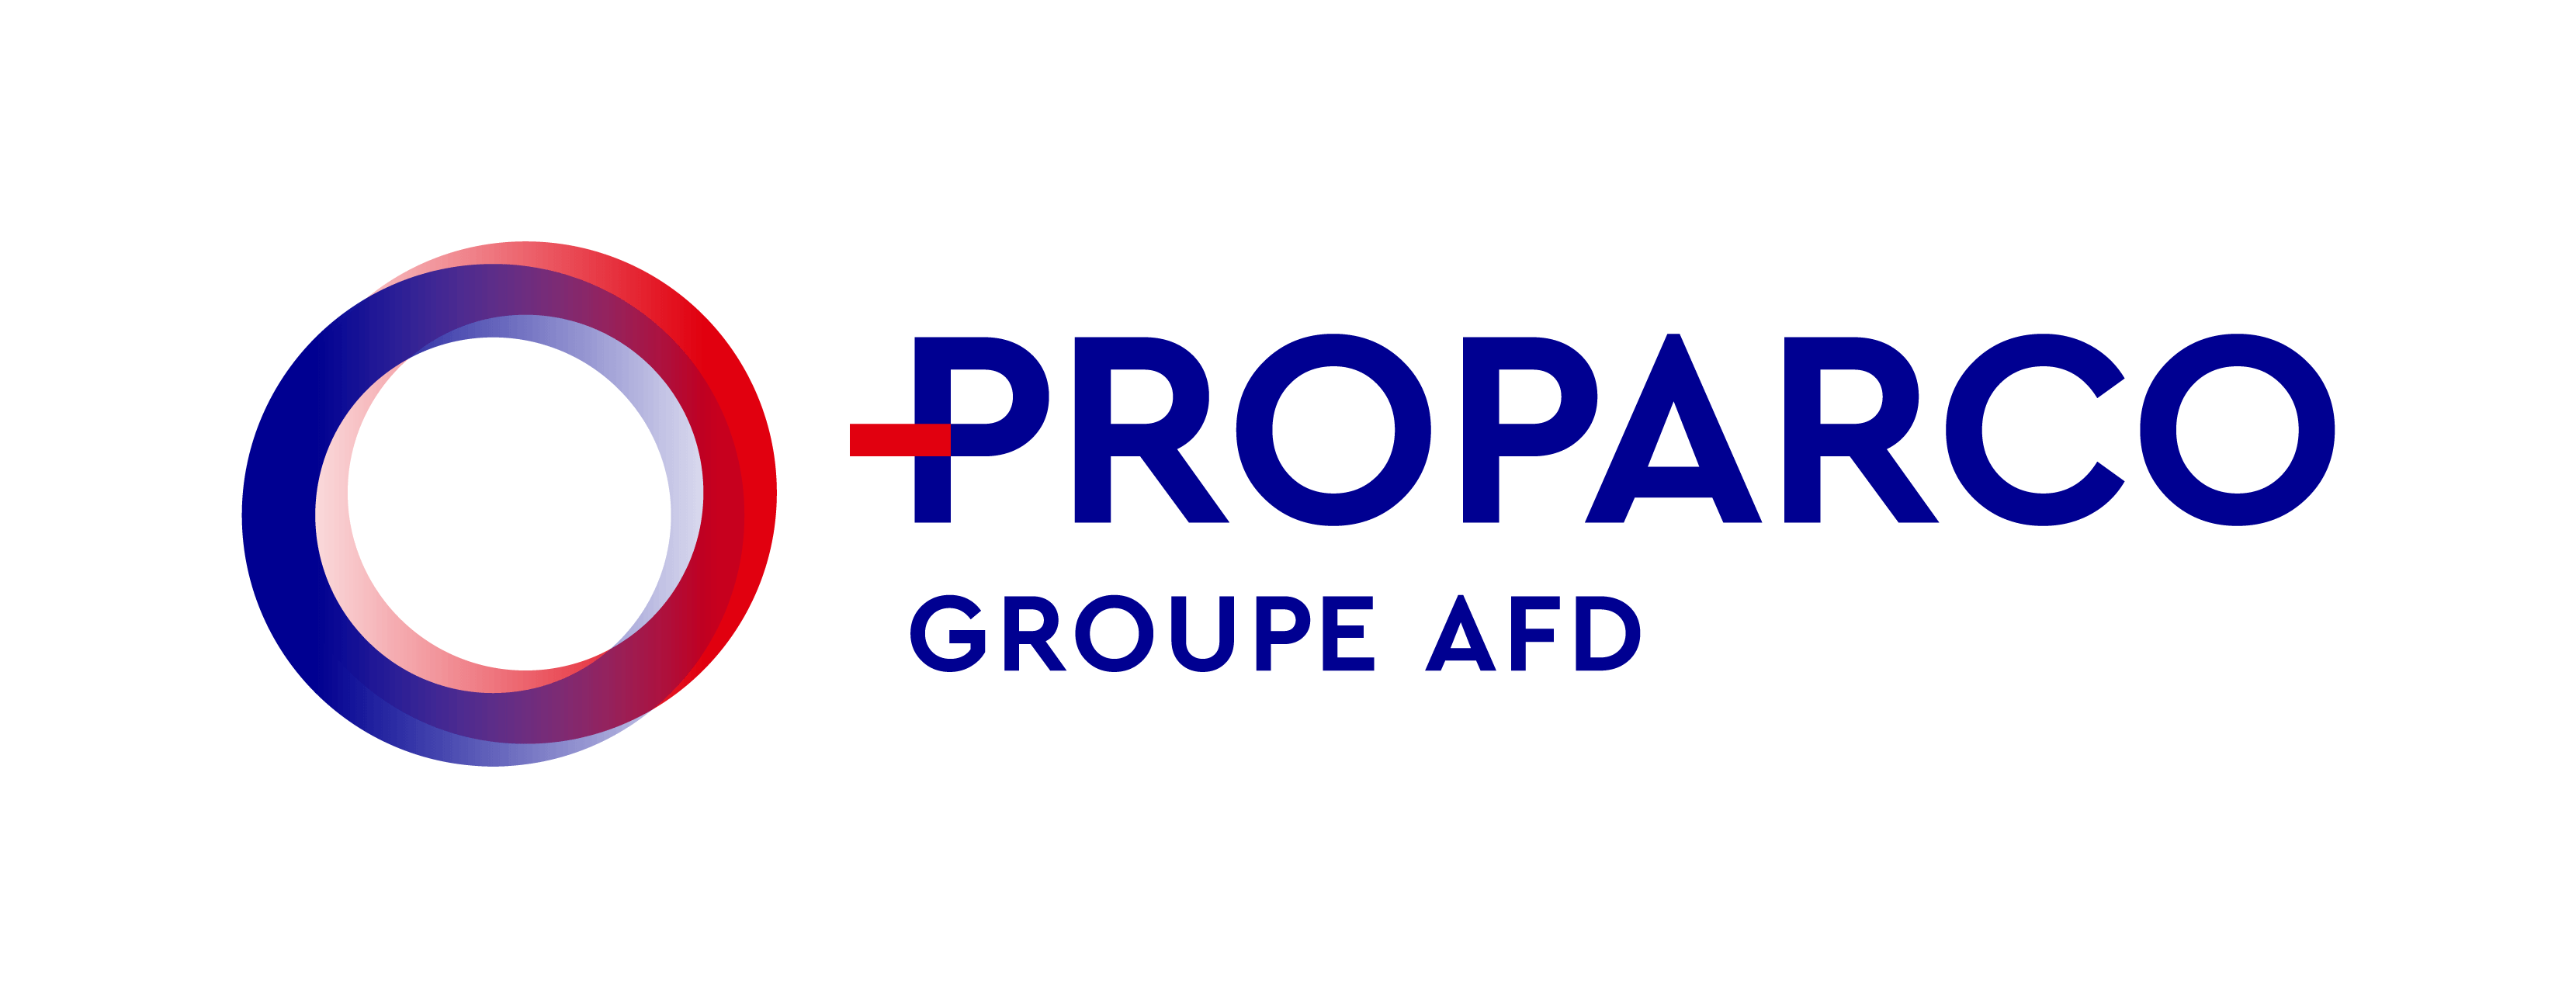 PROPARCO Logo